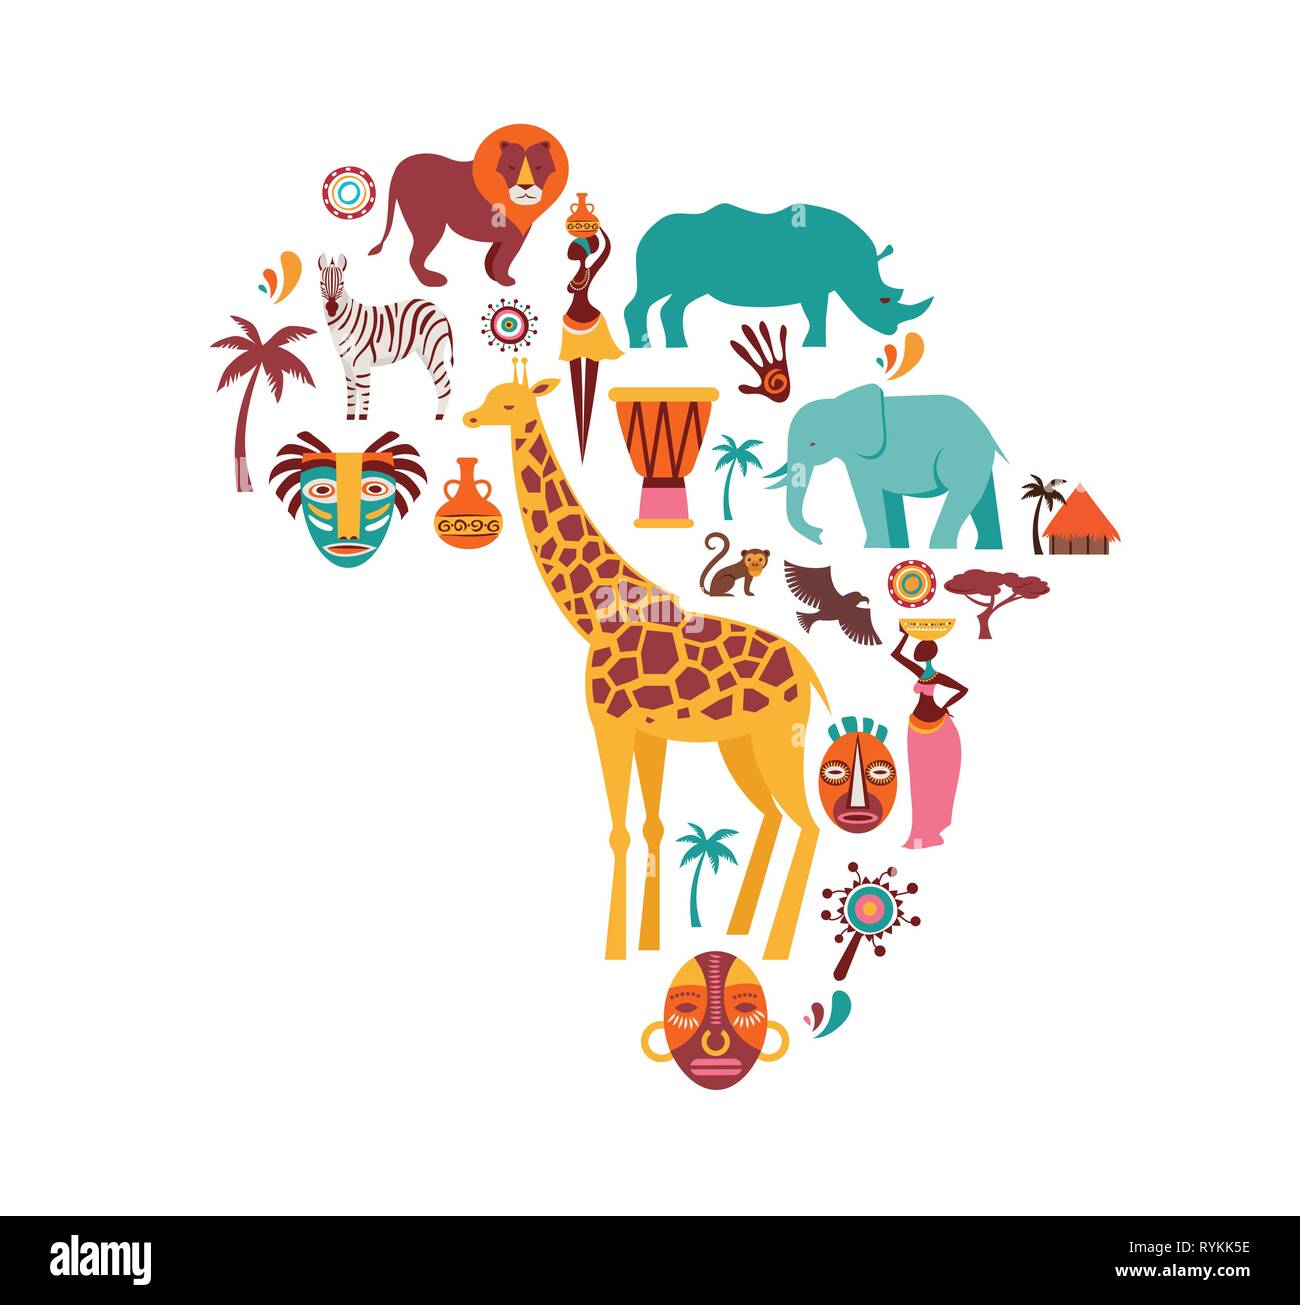 Afrika Karte mit Tieren Symbole, tribal Symbole veranschaulicht. Vektor Design Stock Vektor